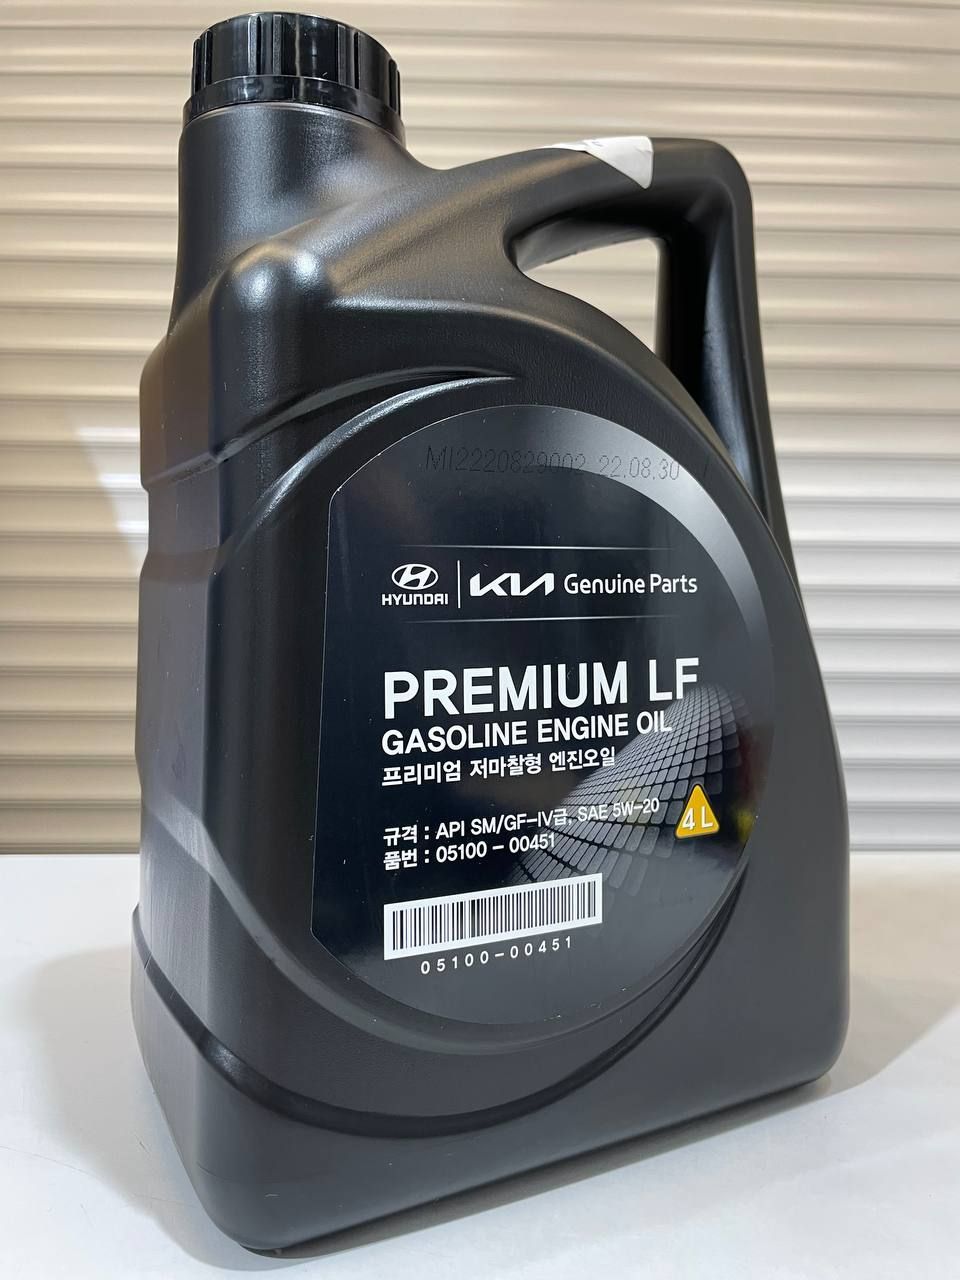 Hyundai Premium gasoline 5w-20. Hyundai Premium LF gasoline 5w-20. Hyundai/Kia Premium LF gasoline. Моторное масло премиум ЛФ 5w20 характеристики отзывы цена.